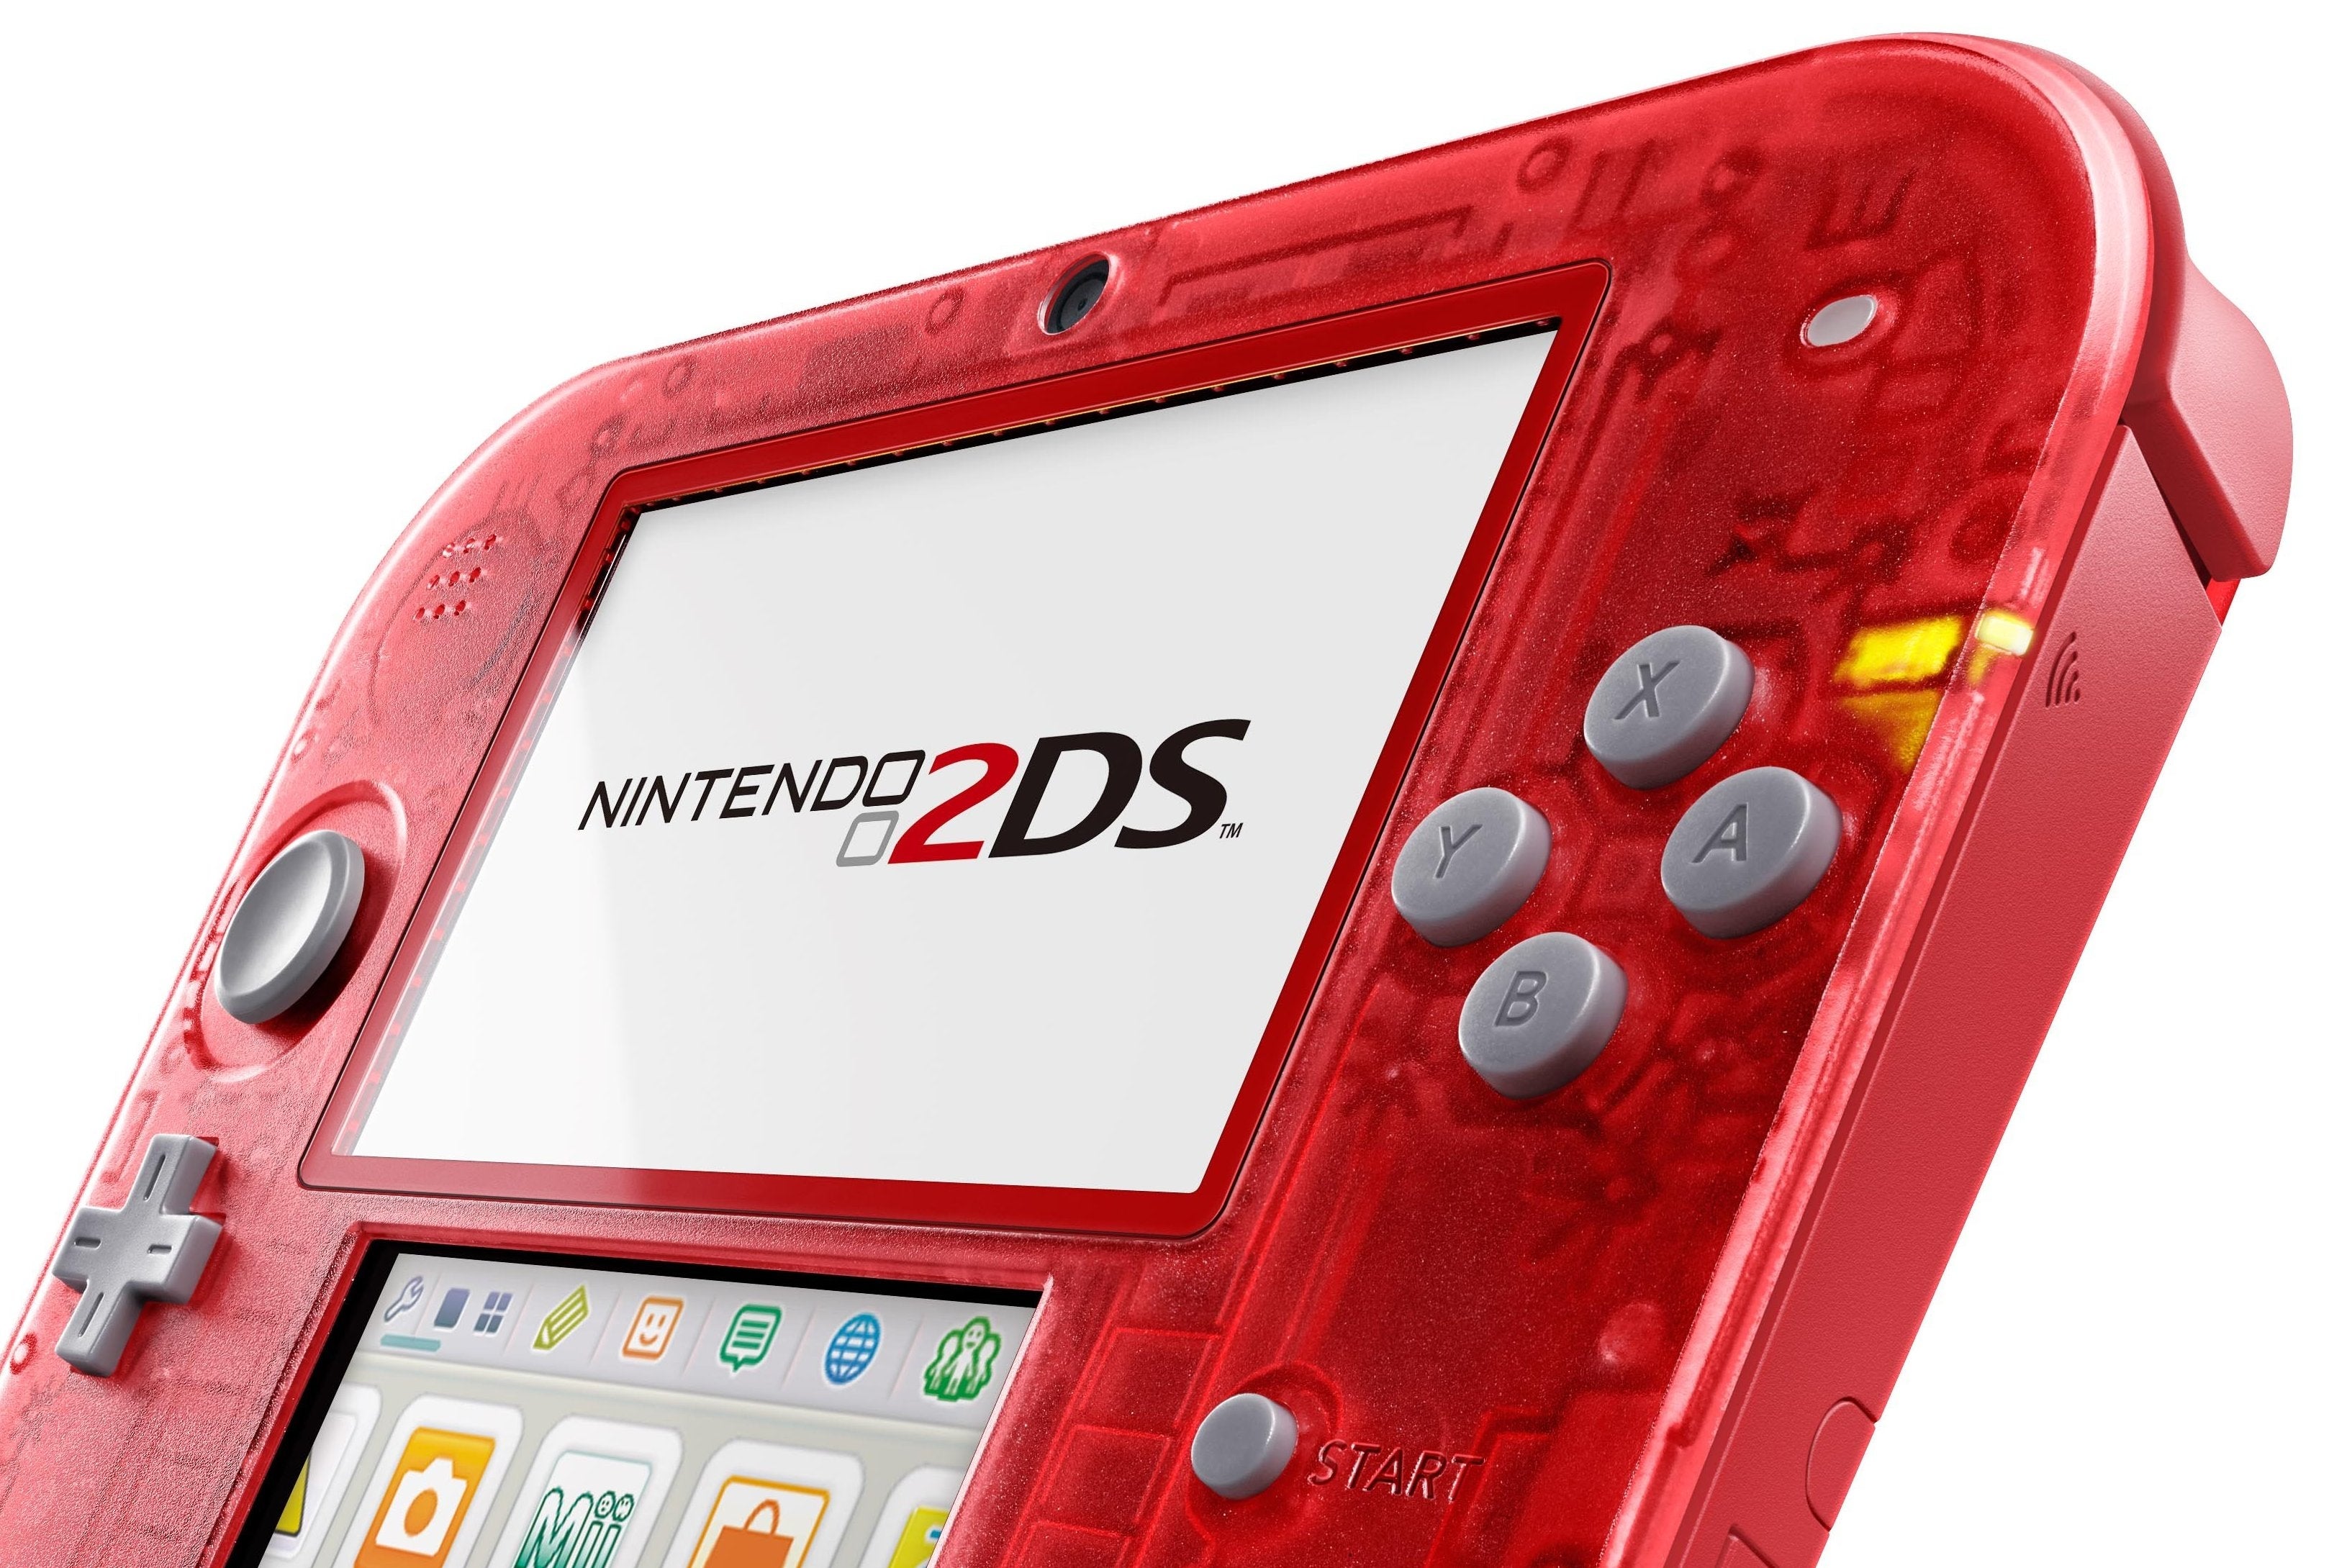 Transparent Red and Blue Nintendo 2DS designs revealed 